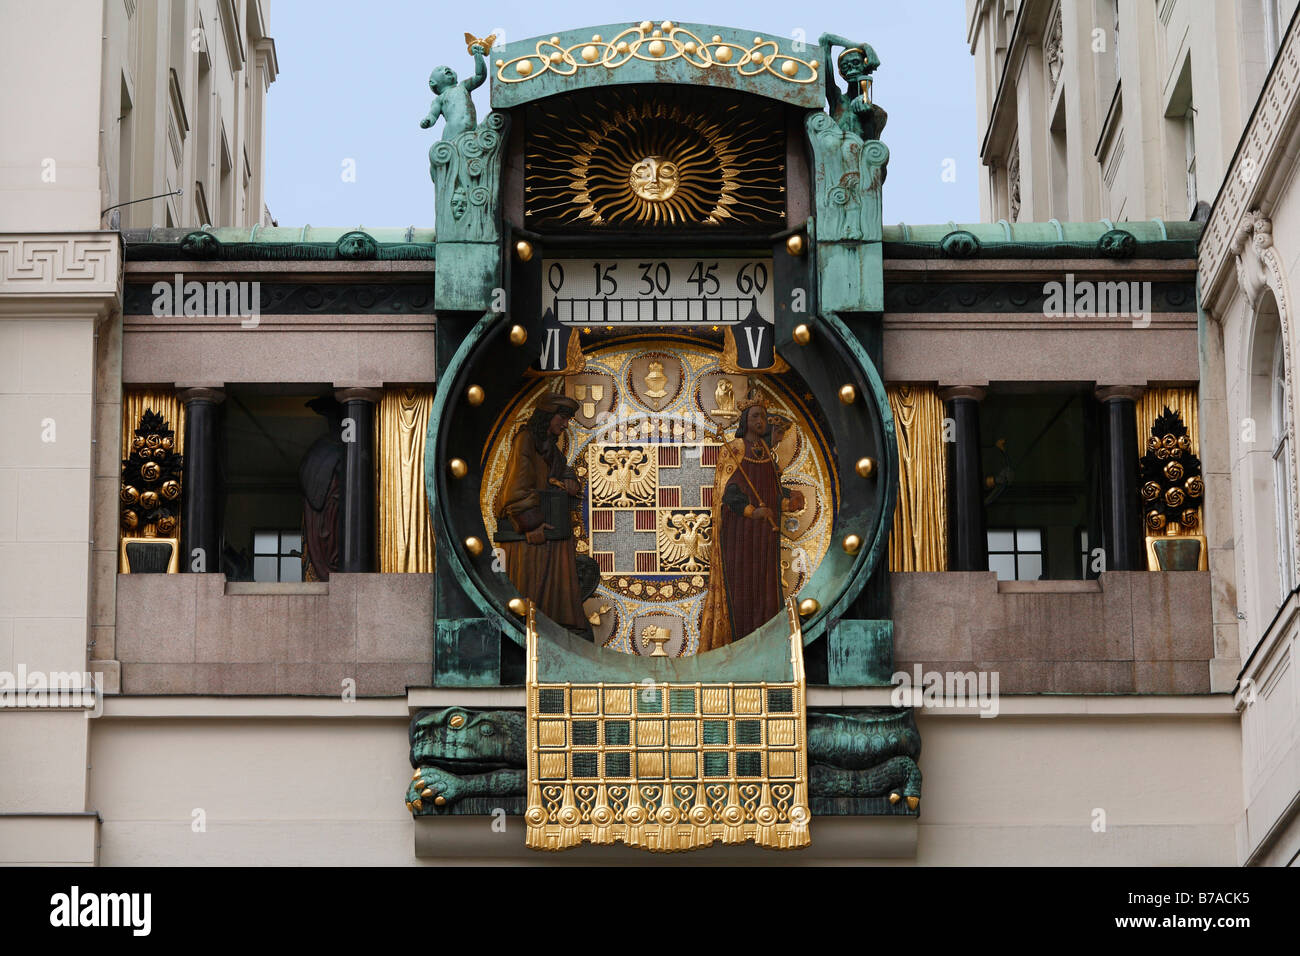 Ankeruhr, Anker clock, art nouveau clock, Hoher Markt, Vienna, Austria, Europe Stock Photo